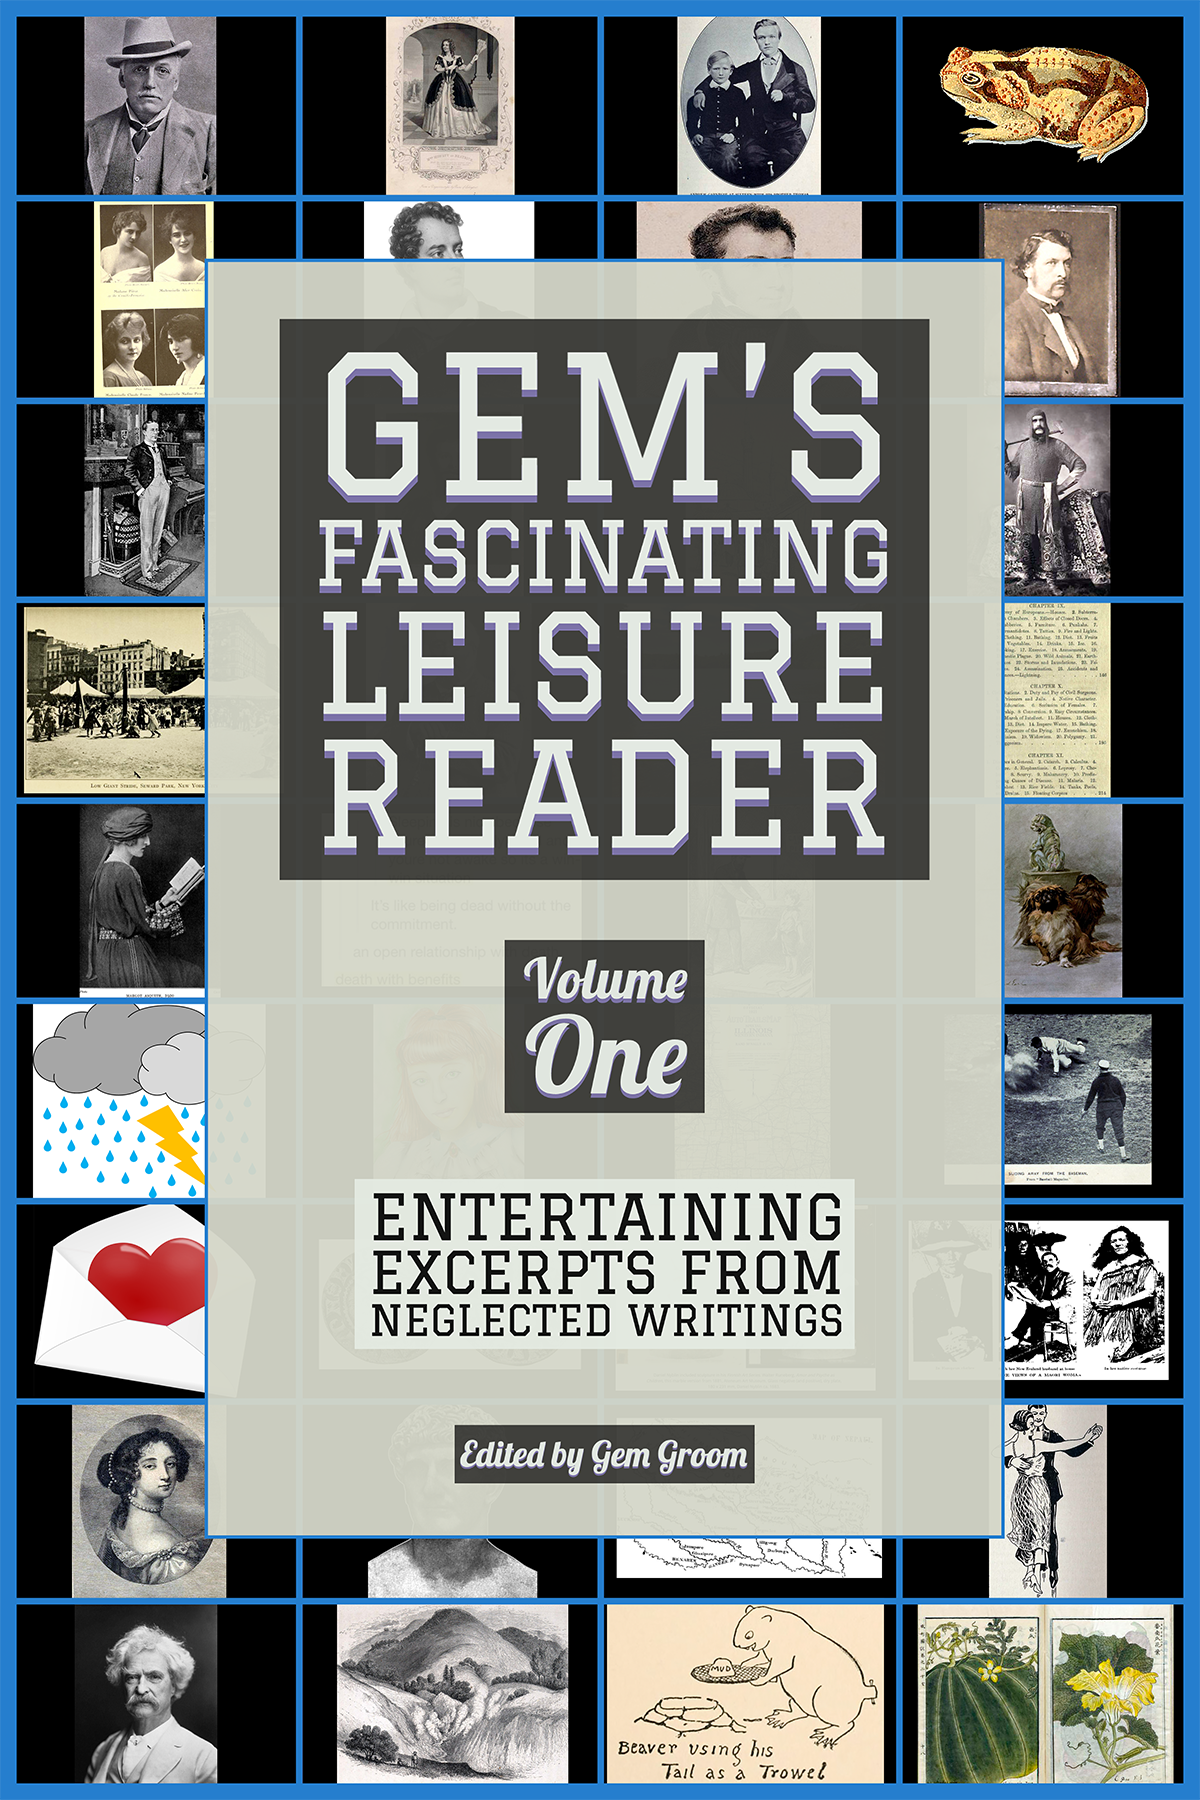 Gem’s Fascinating Leisure Reader: Volume One